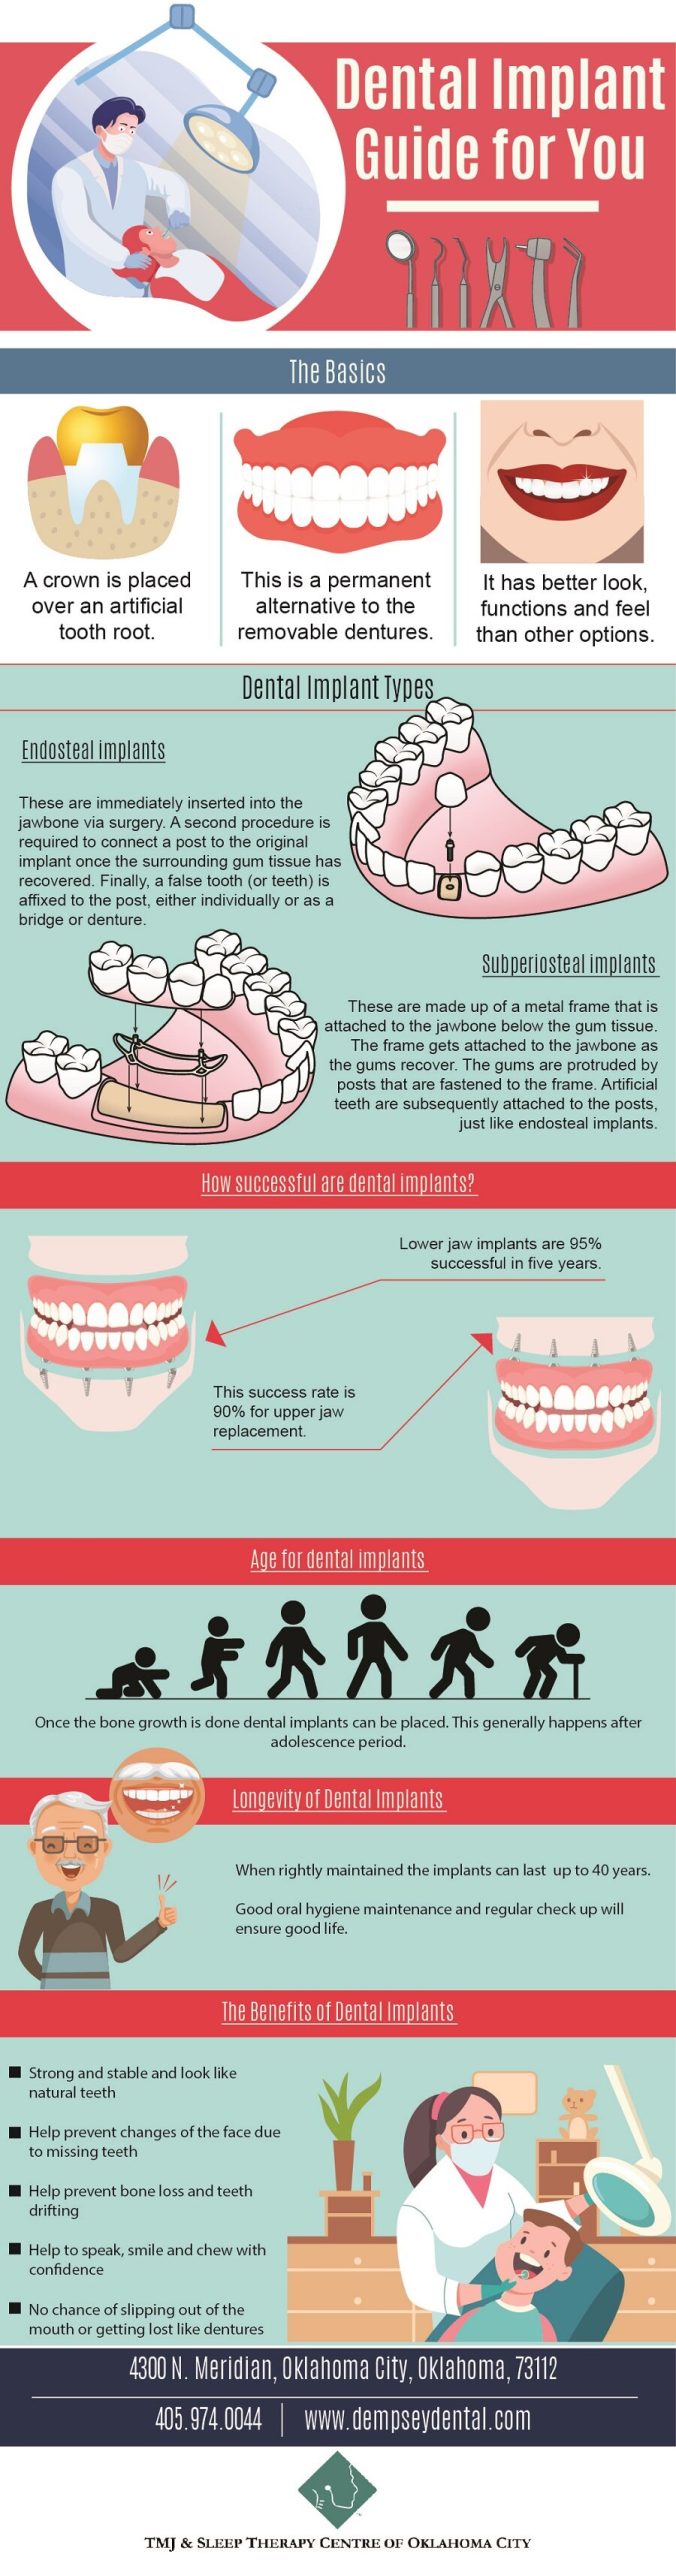 Dental implant guide